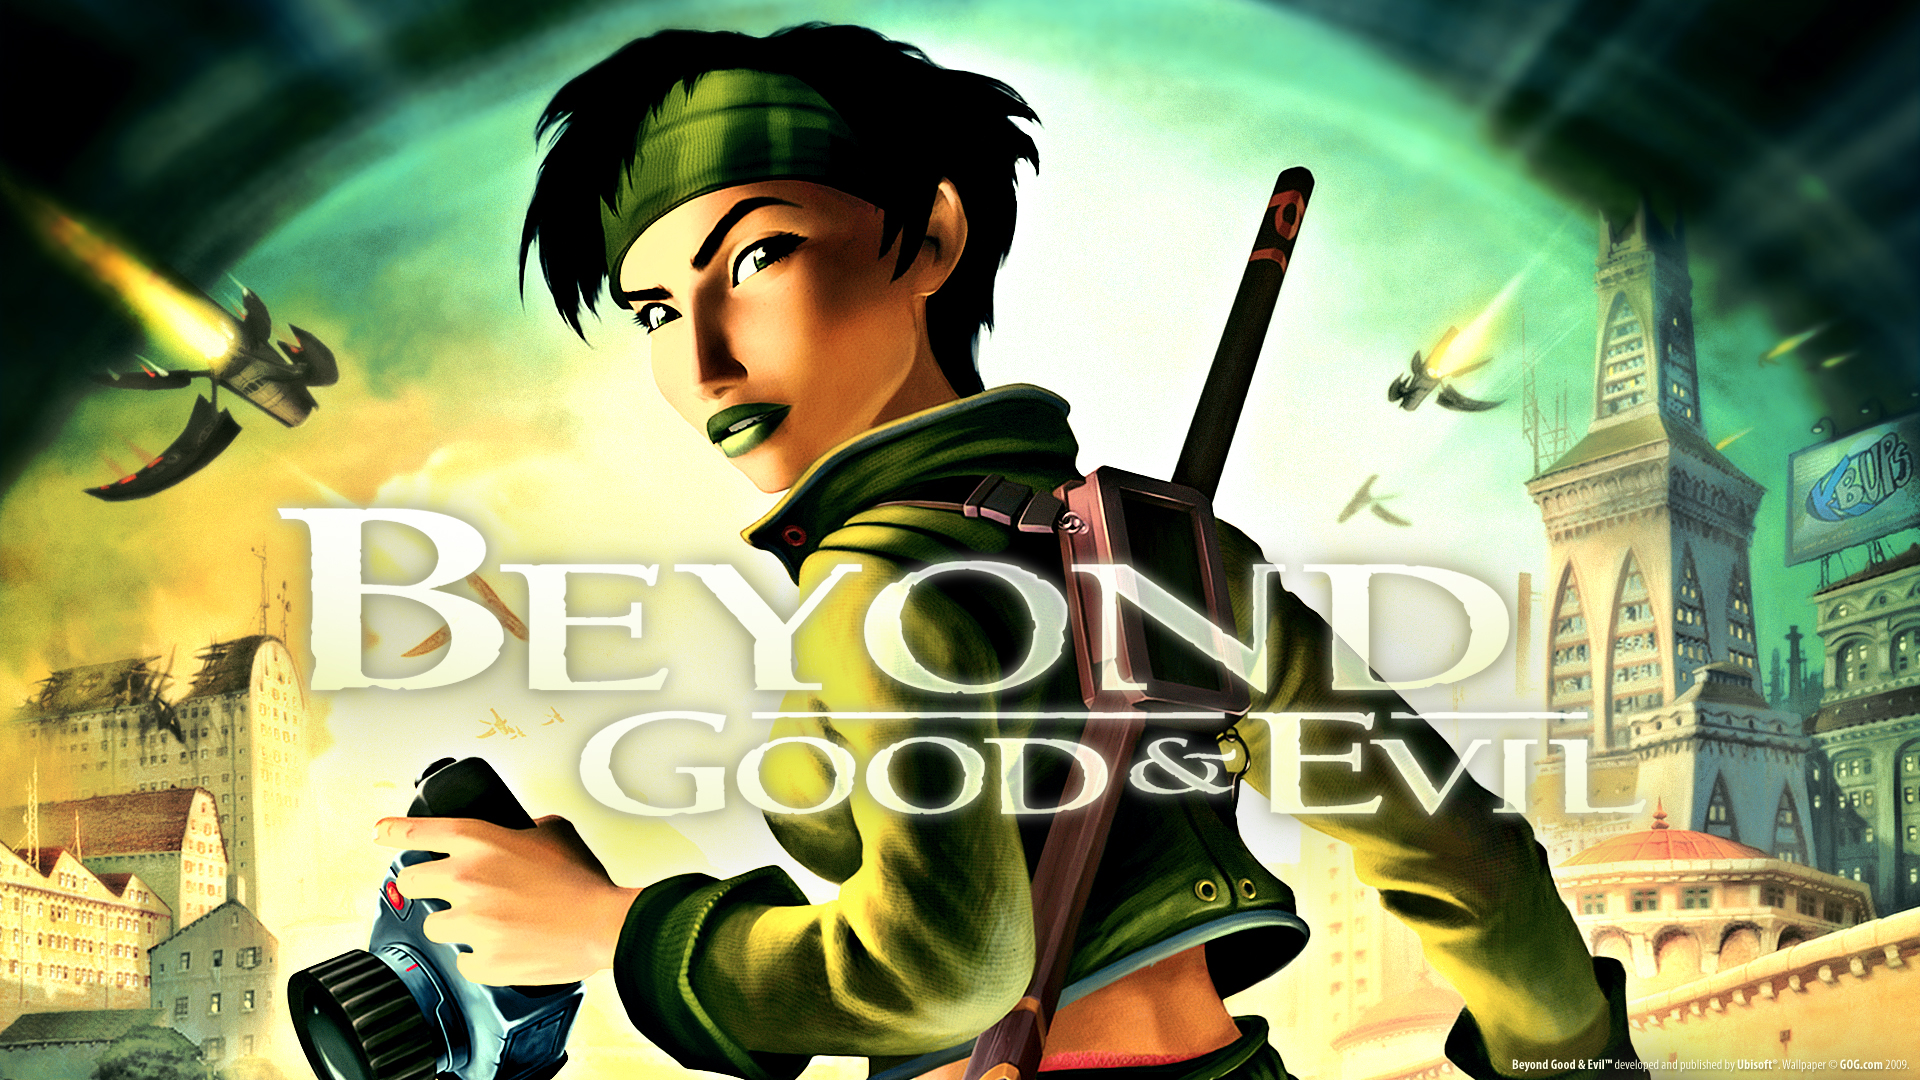 Beyond Good and Evil: Game bản quyền thứ 5 Ubisoft tặng